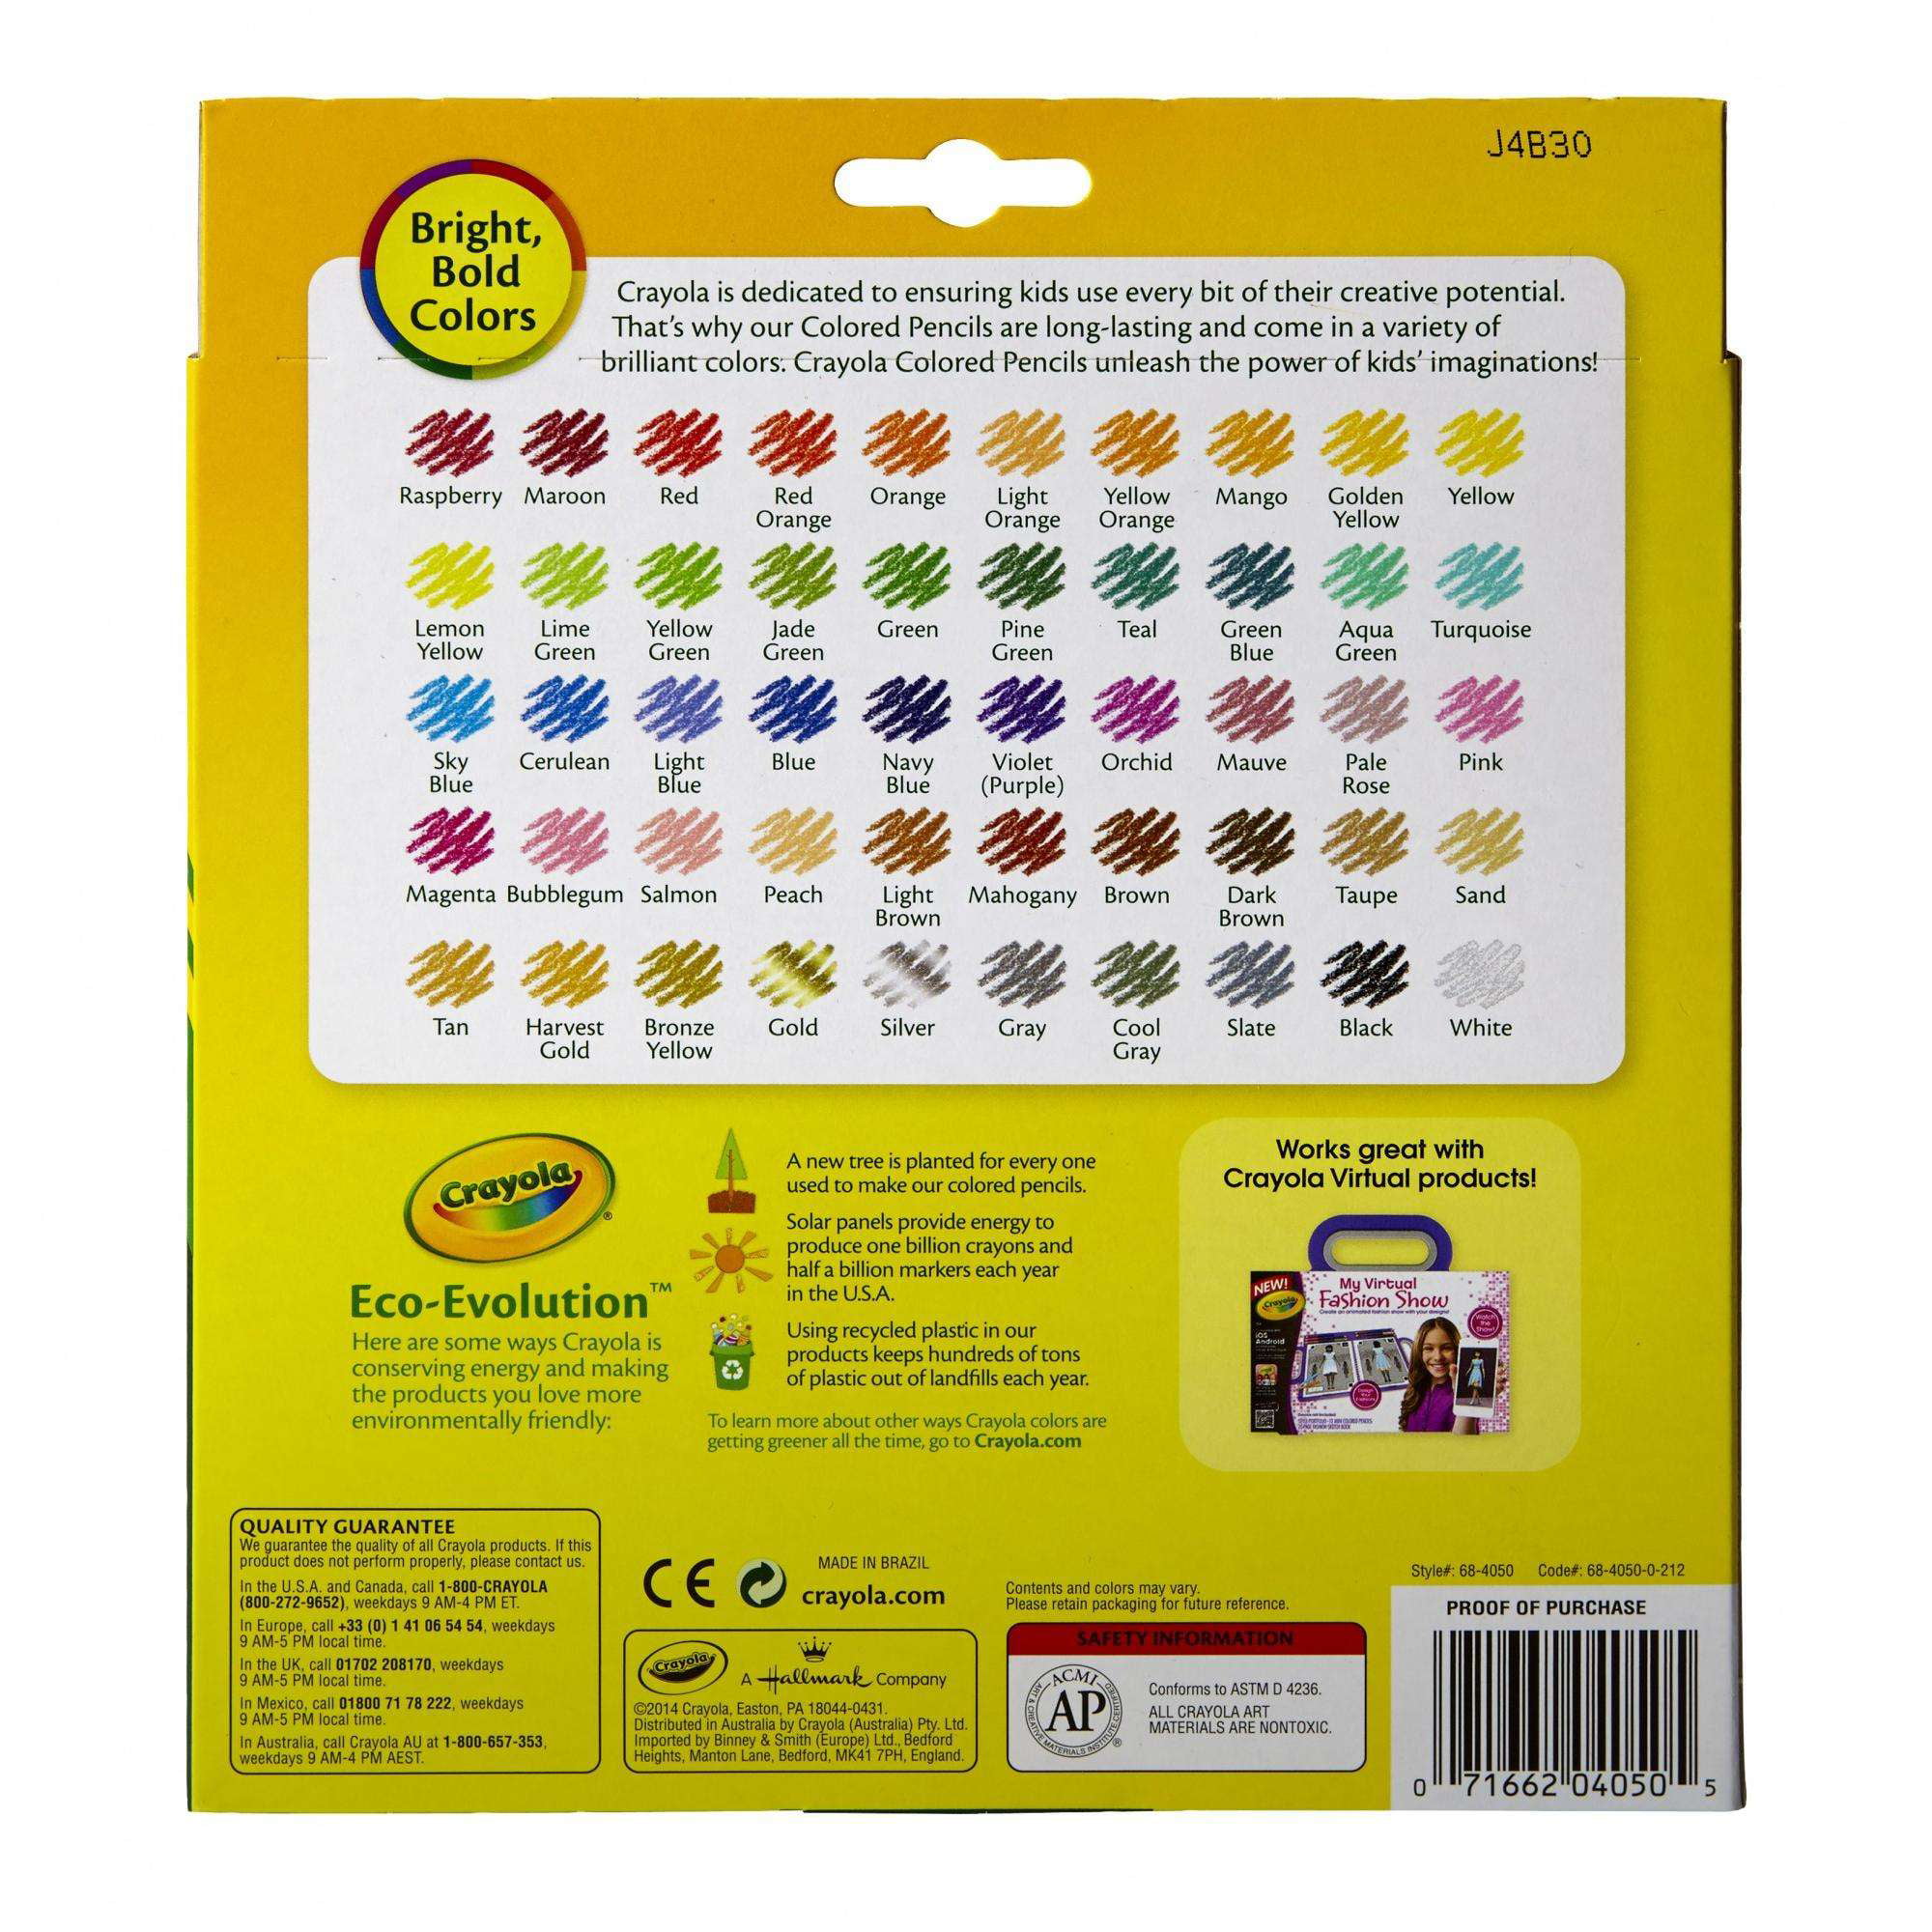 Crayola Colored Pencil Color Chart